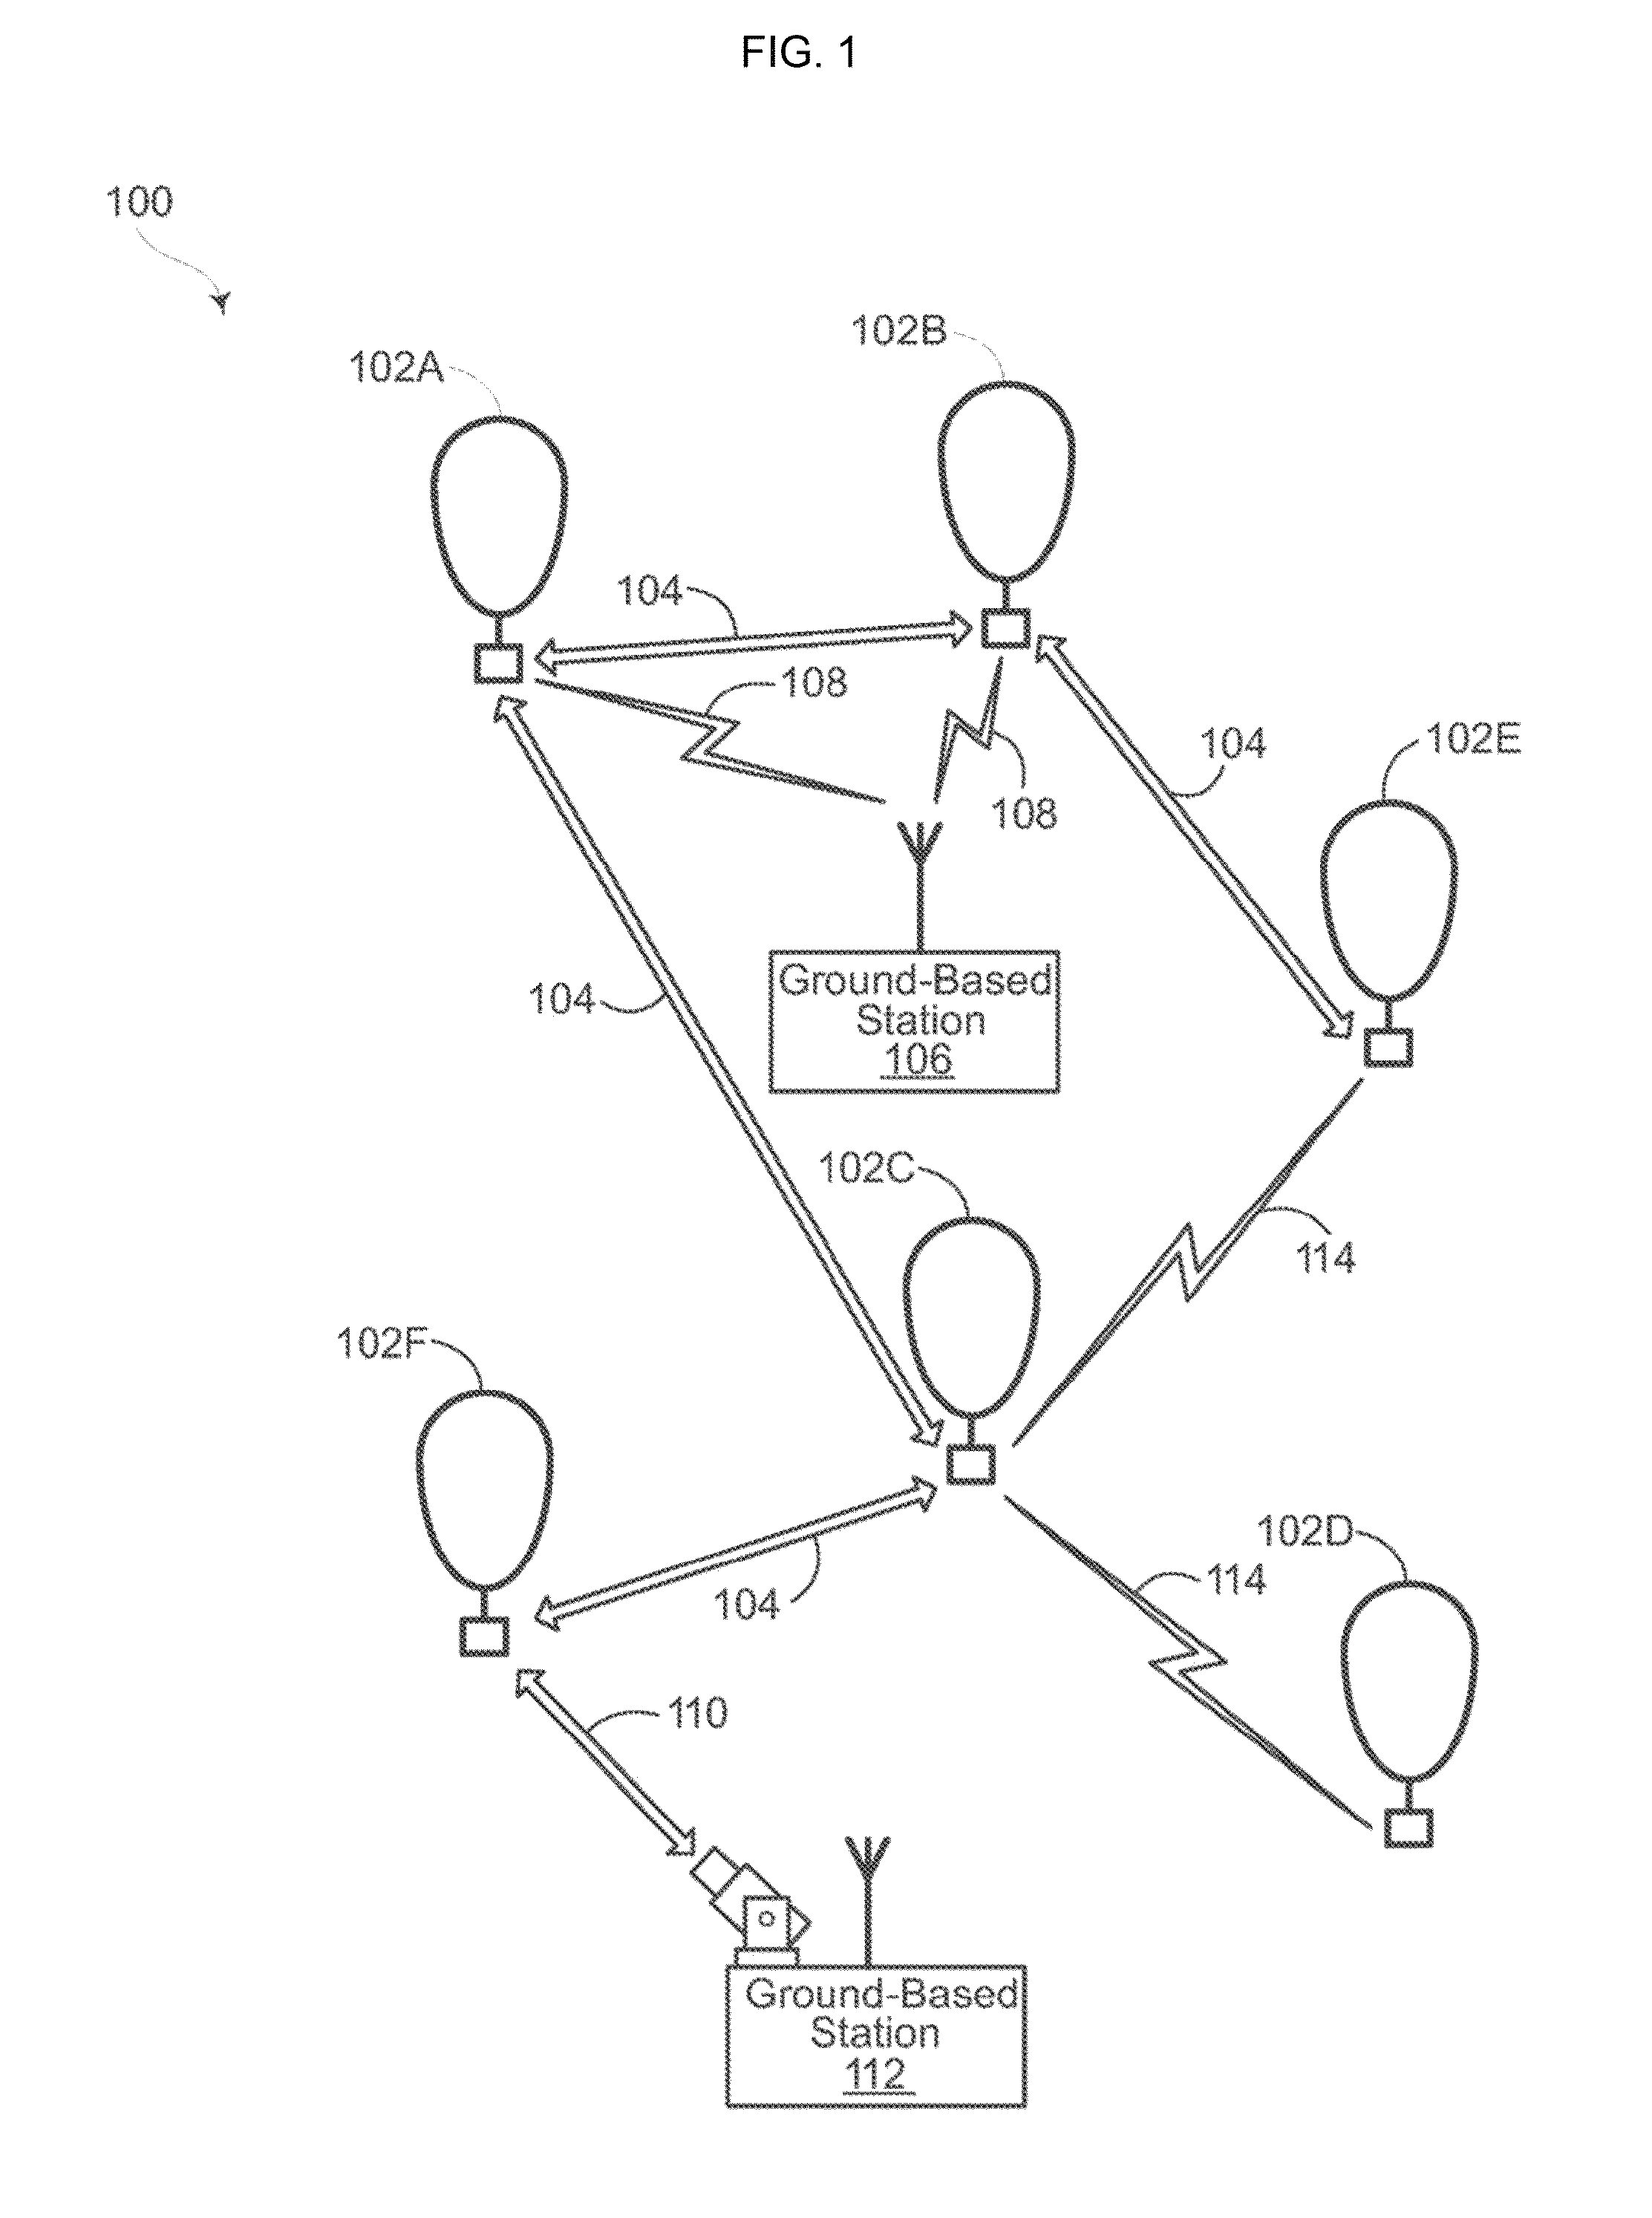 Tendon routing at envelope apex